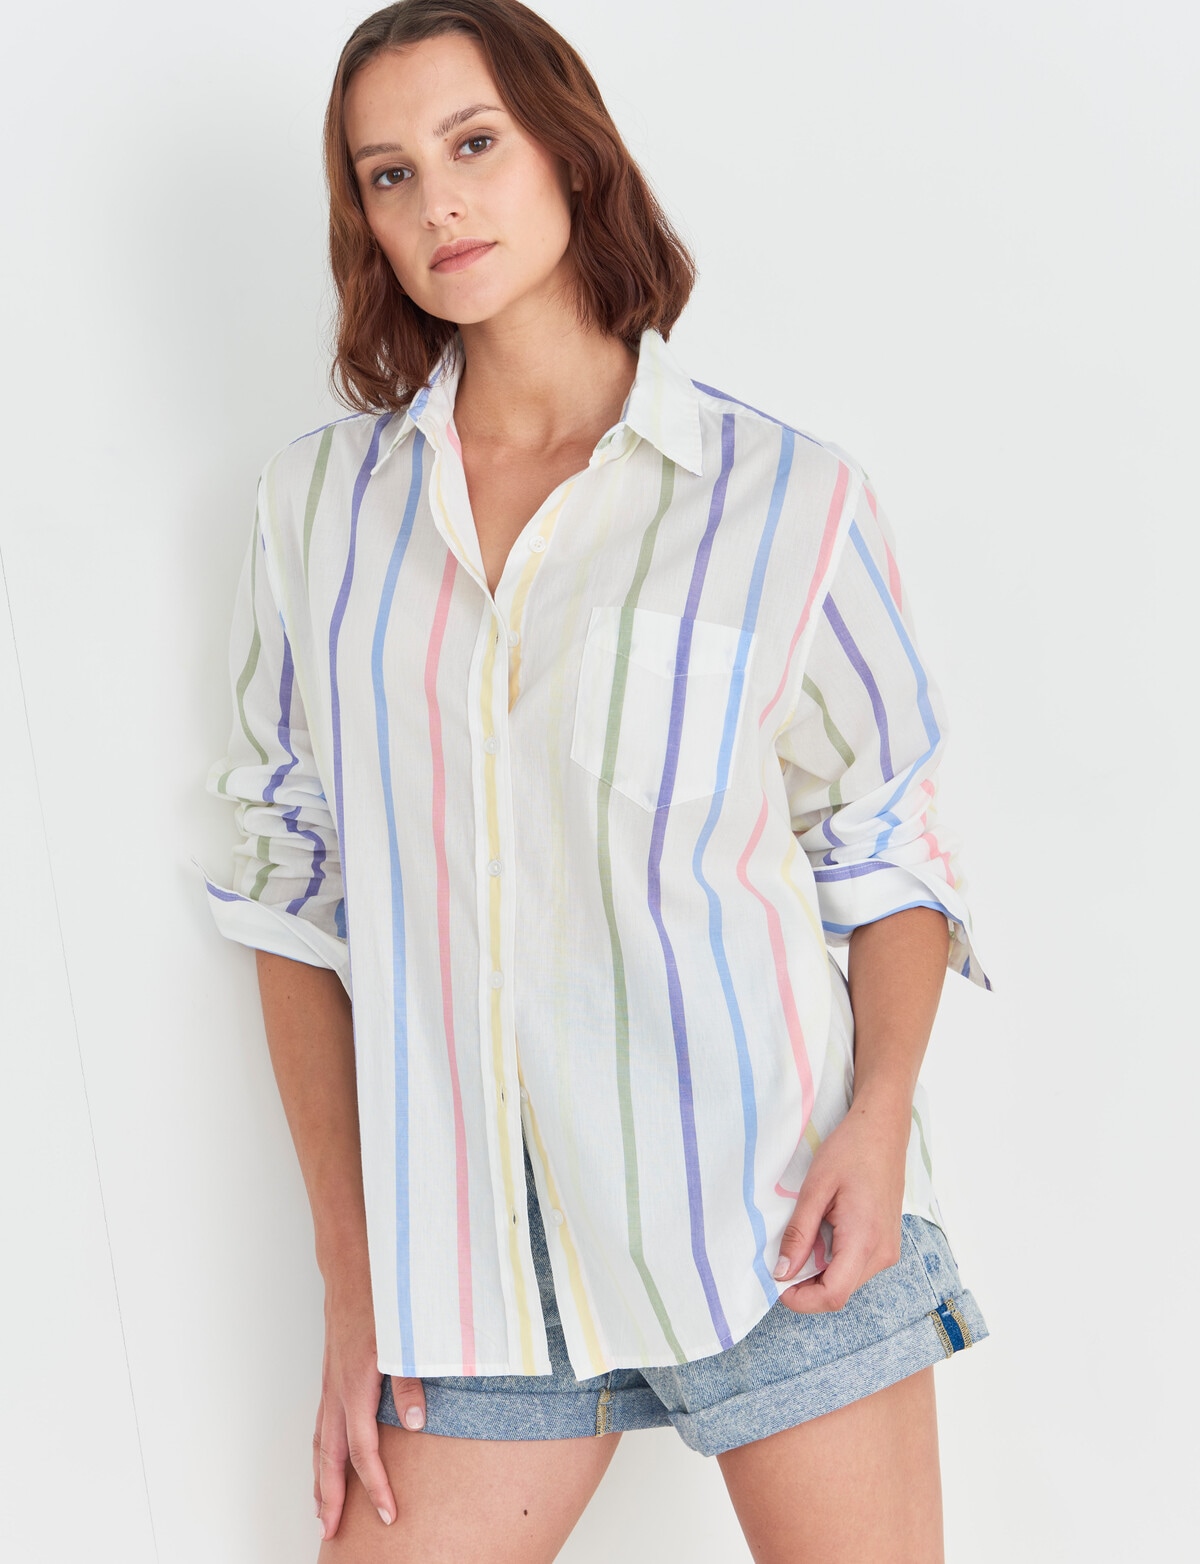 Zest Cotton Voile Stripe Shirt, White - Tops